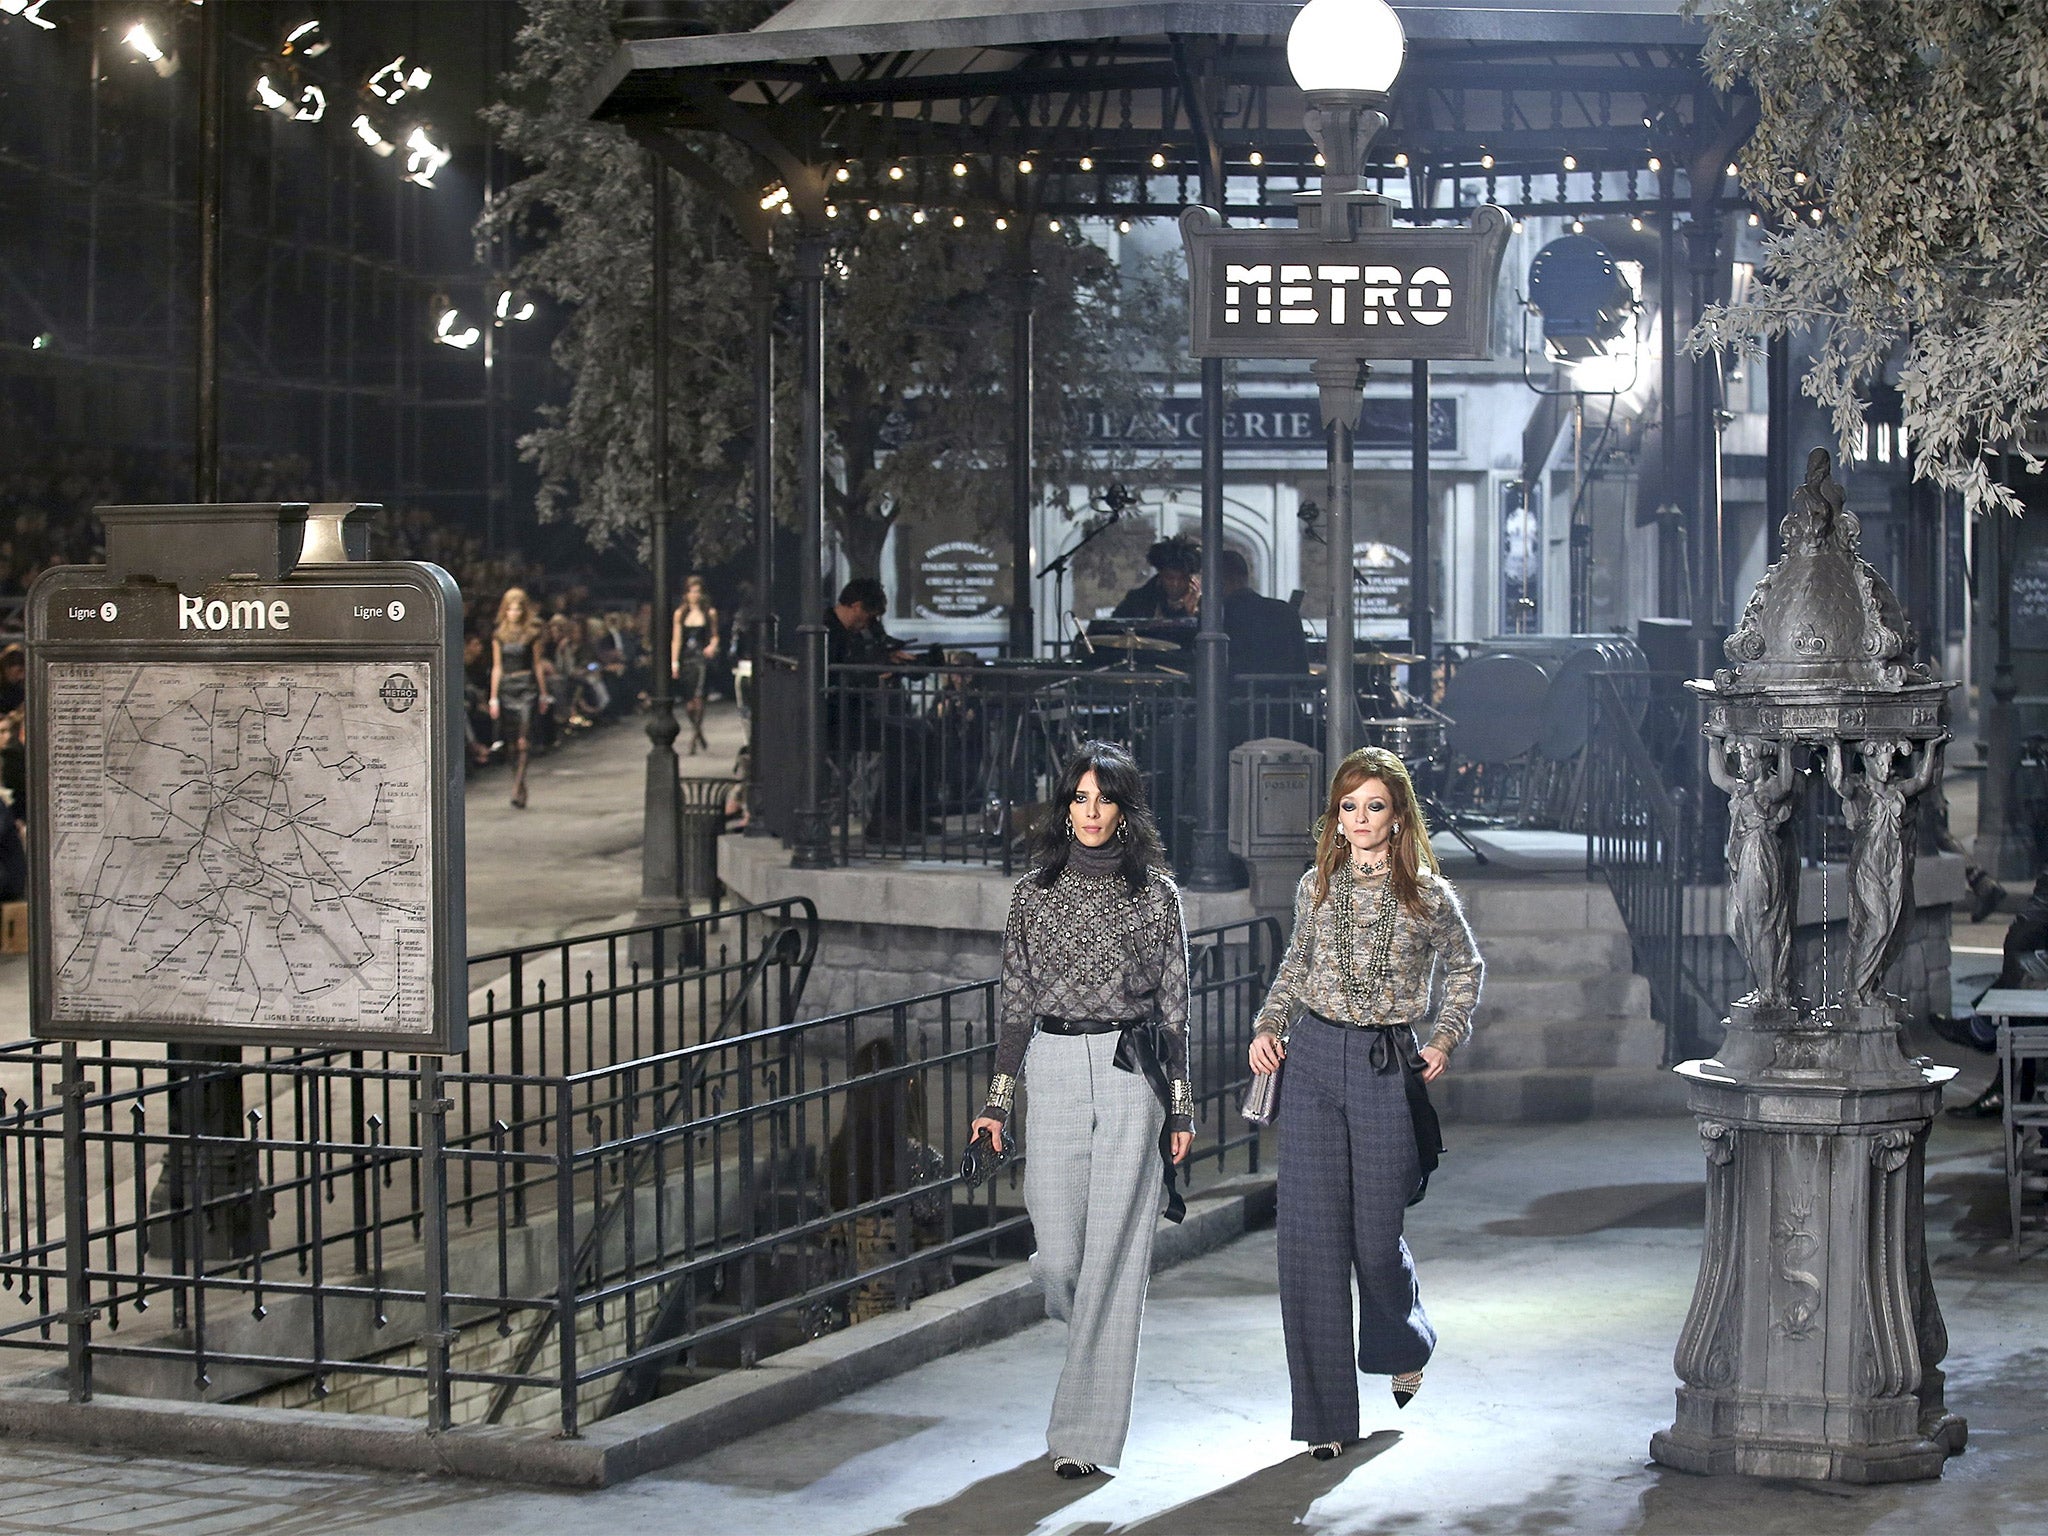 Paris is recreated in the Cinecittà studios for Chanel’s Métiers d’art show